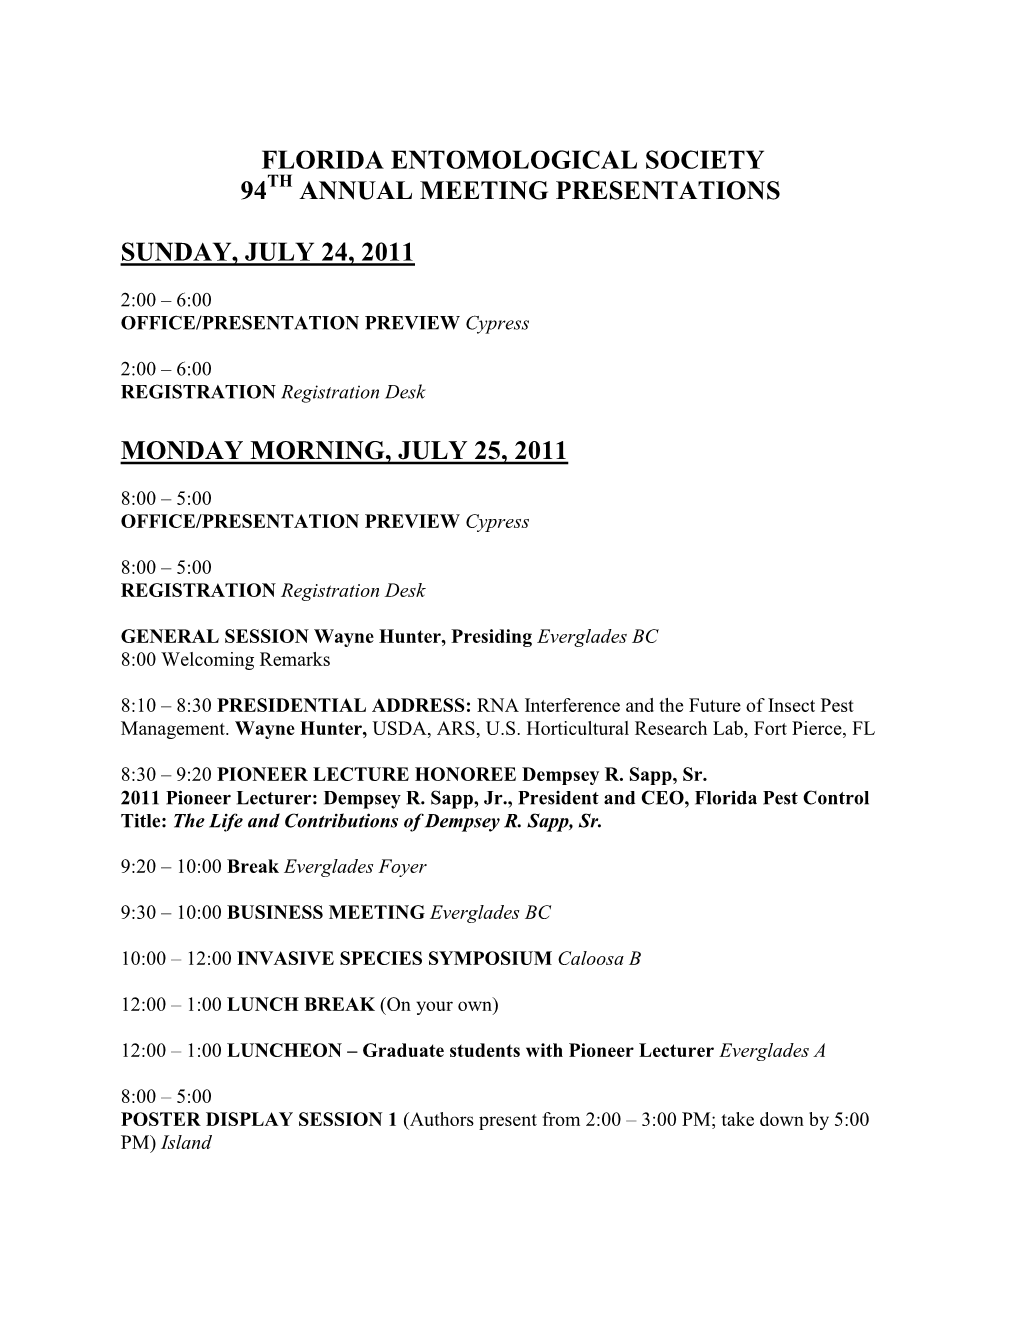 2011 Annual Meeting Program